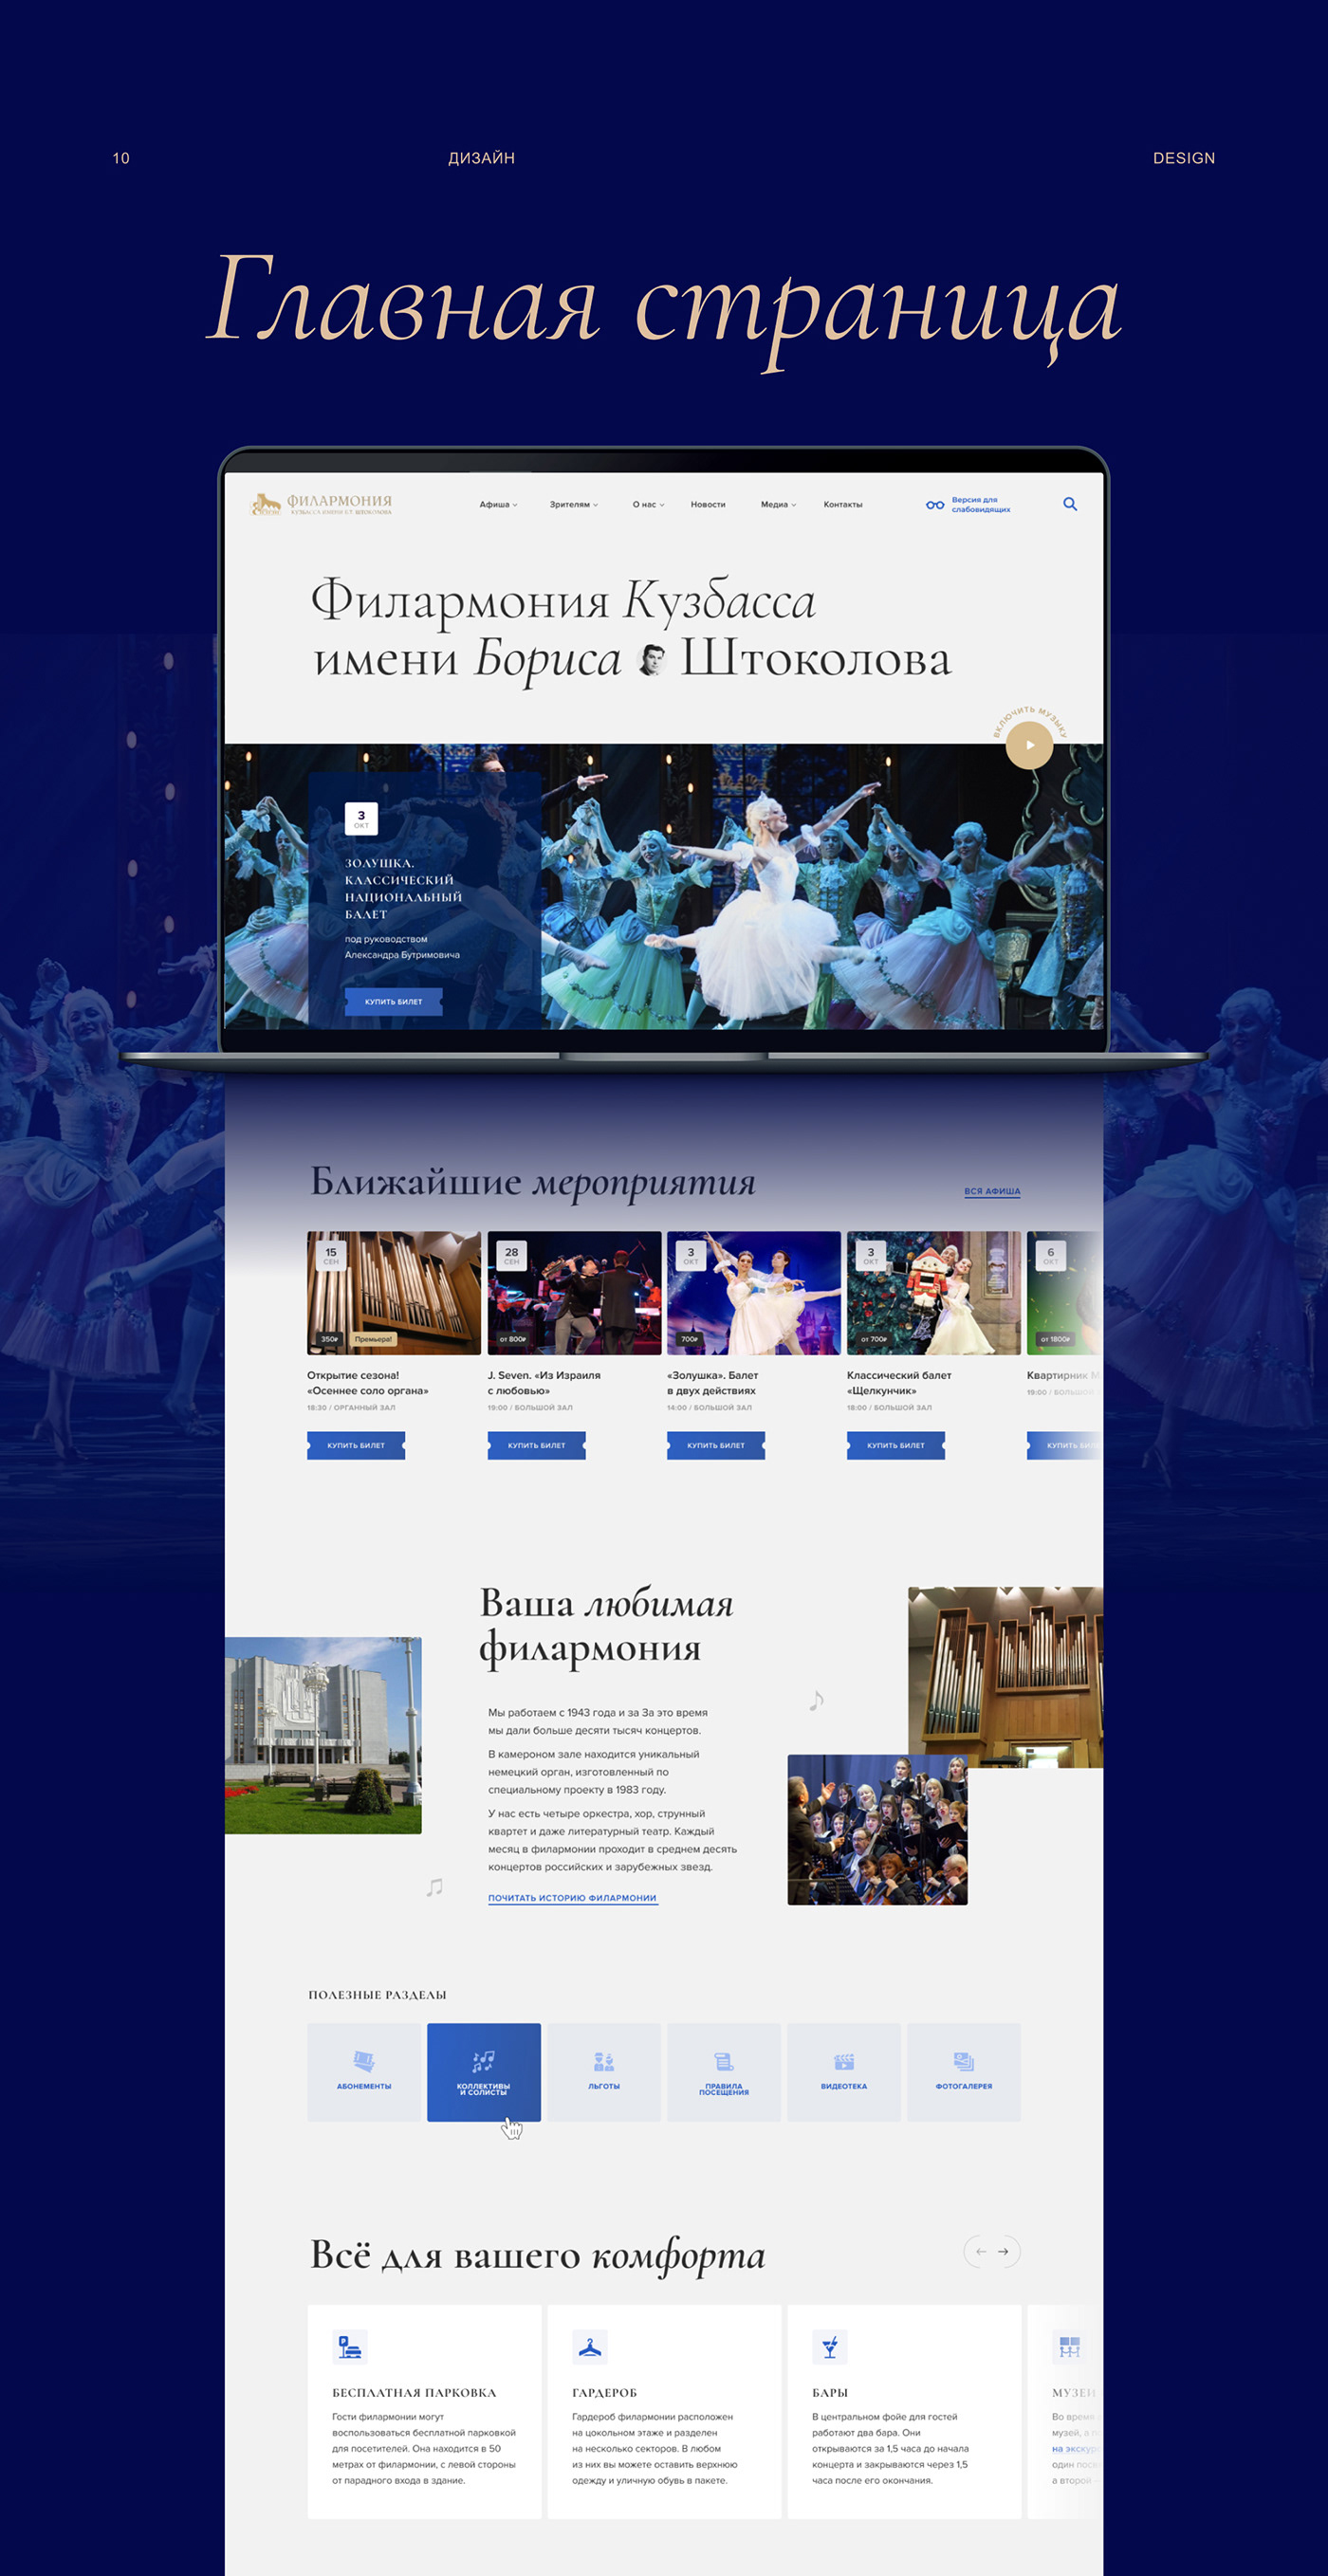 ballet culture music Theatre User Experience Design UX design UX Research website redesign Webdesign UX Case Study